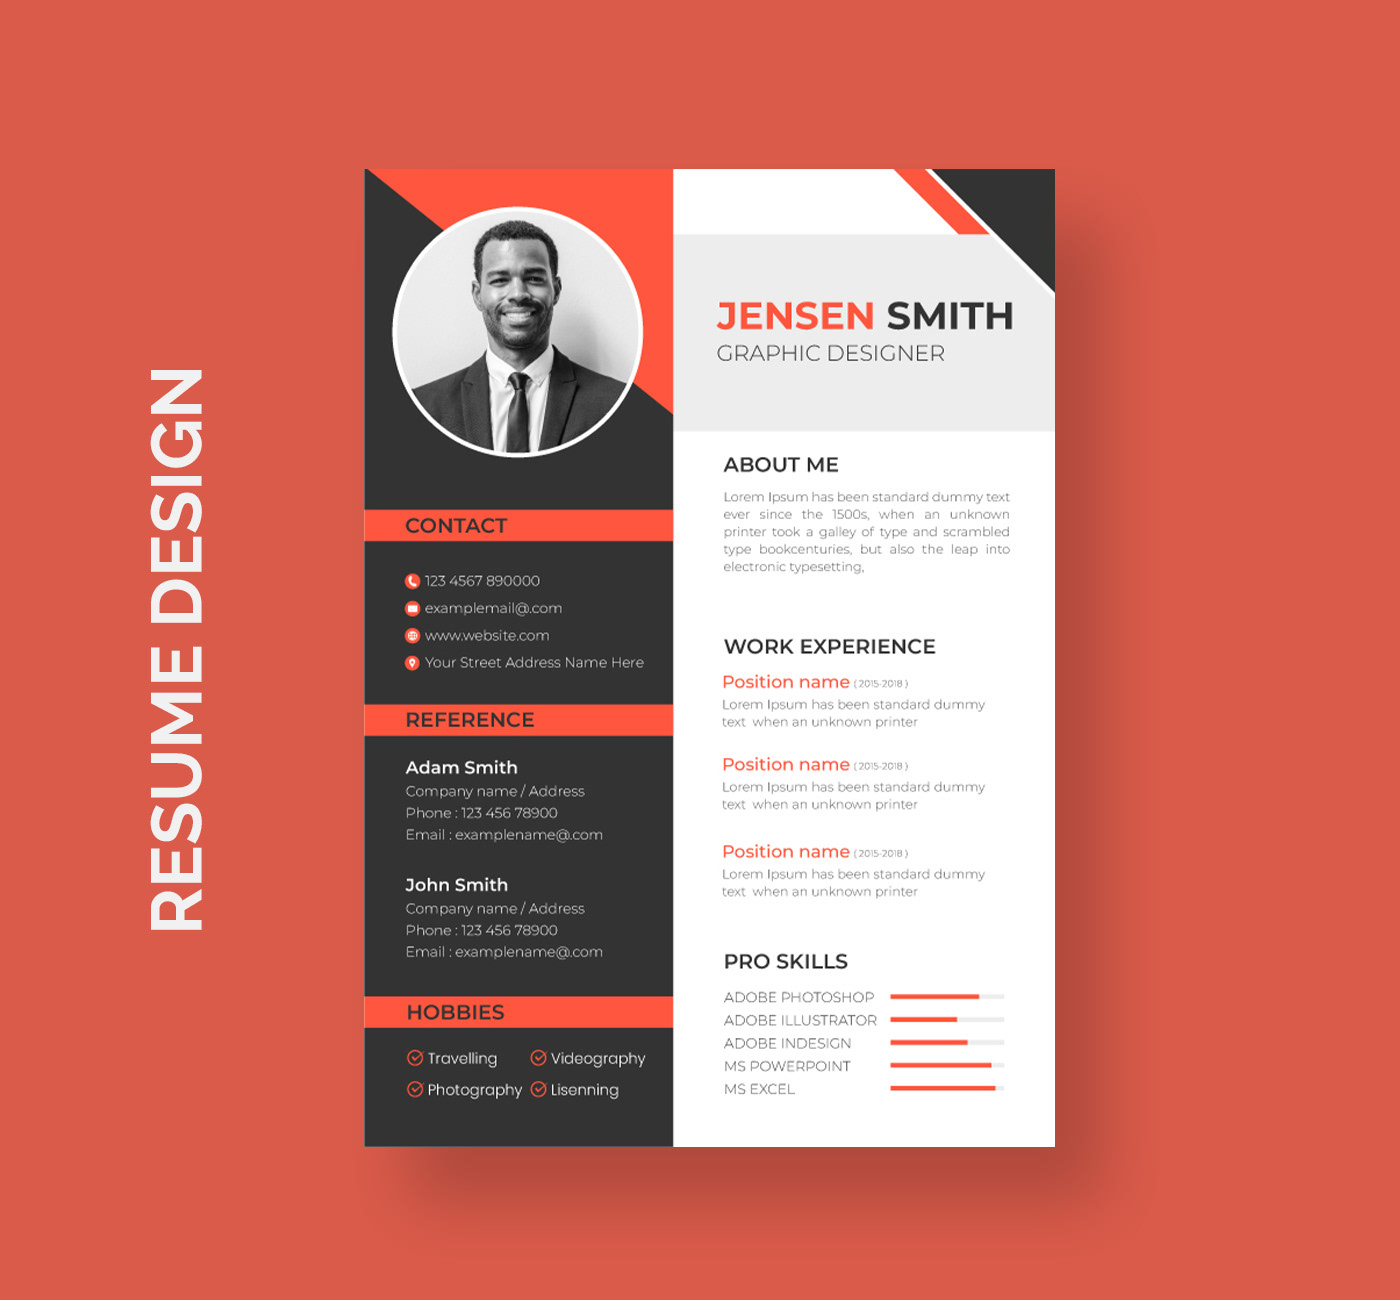 Resume resume design resume template Resume CV CV cv design portfolio design print job